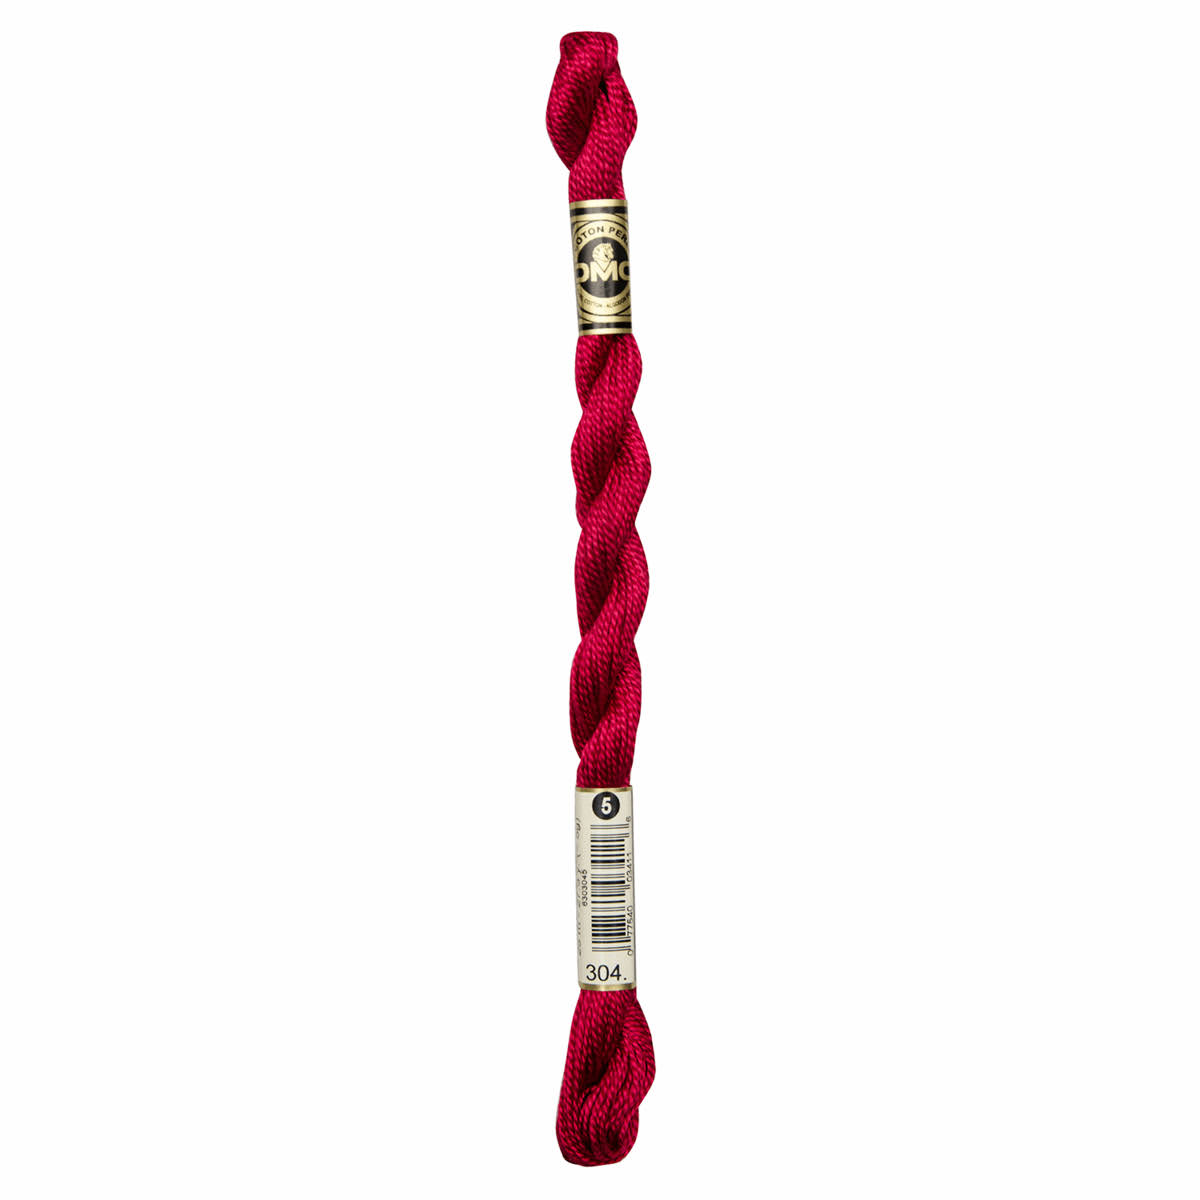 DMC 115 5304 Pearl Cotton Thread - Medium Red, Size 5